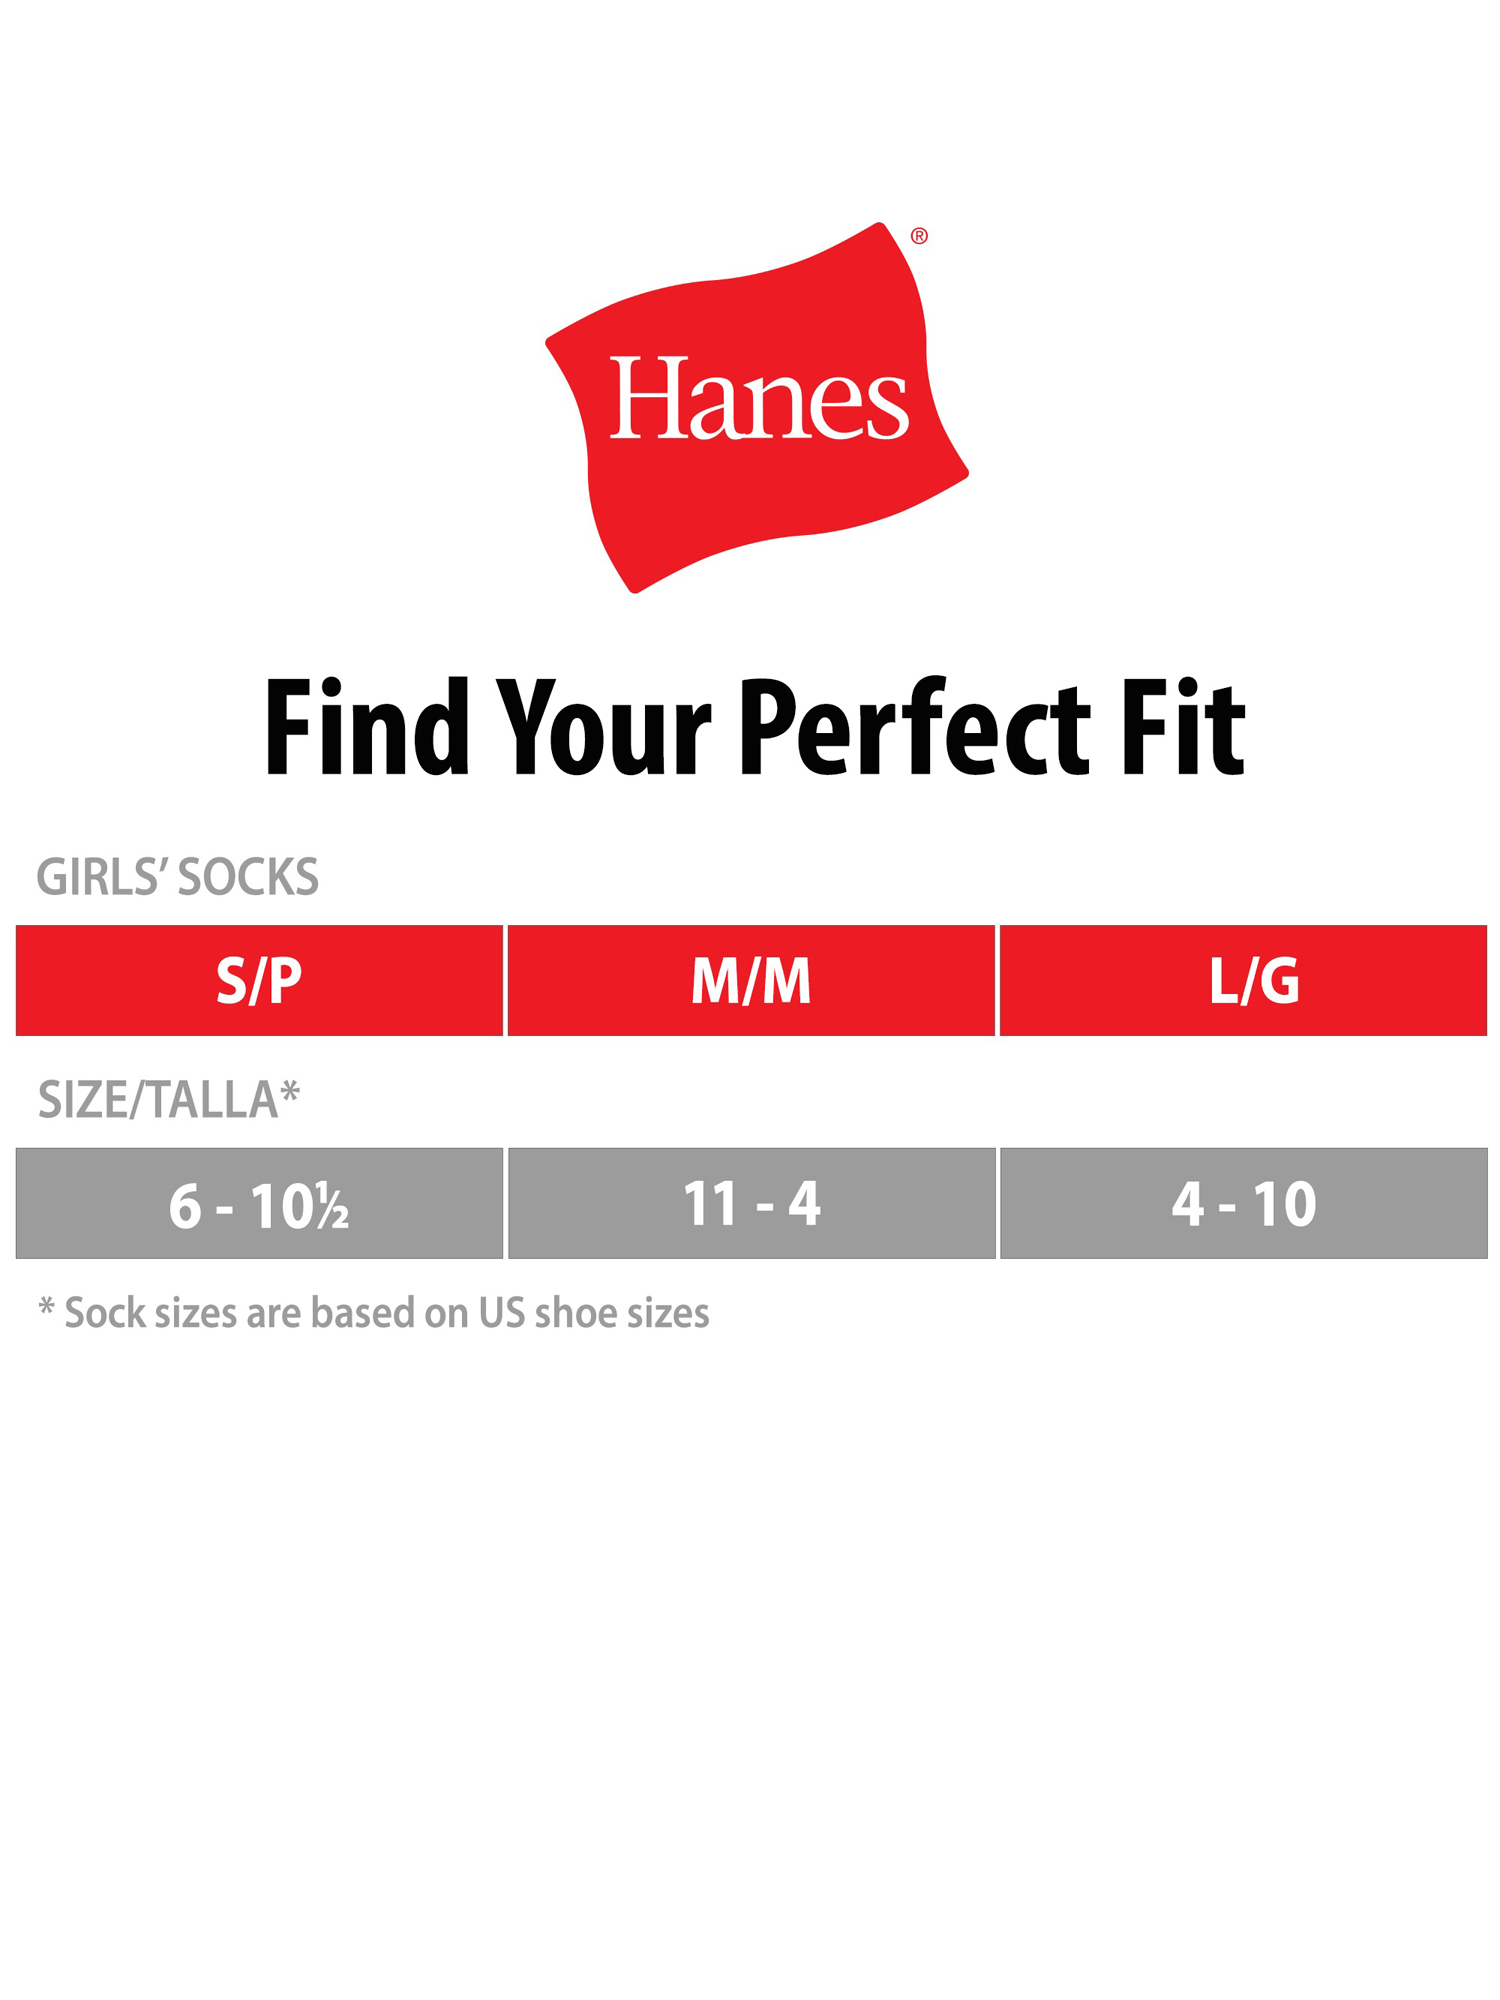 Hanes Girls' Socks, 12 Pack Cool Comfort No Show Socks, Size S-L - image 3 of 5